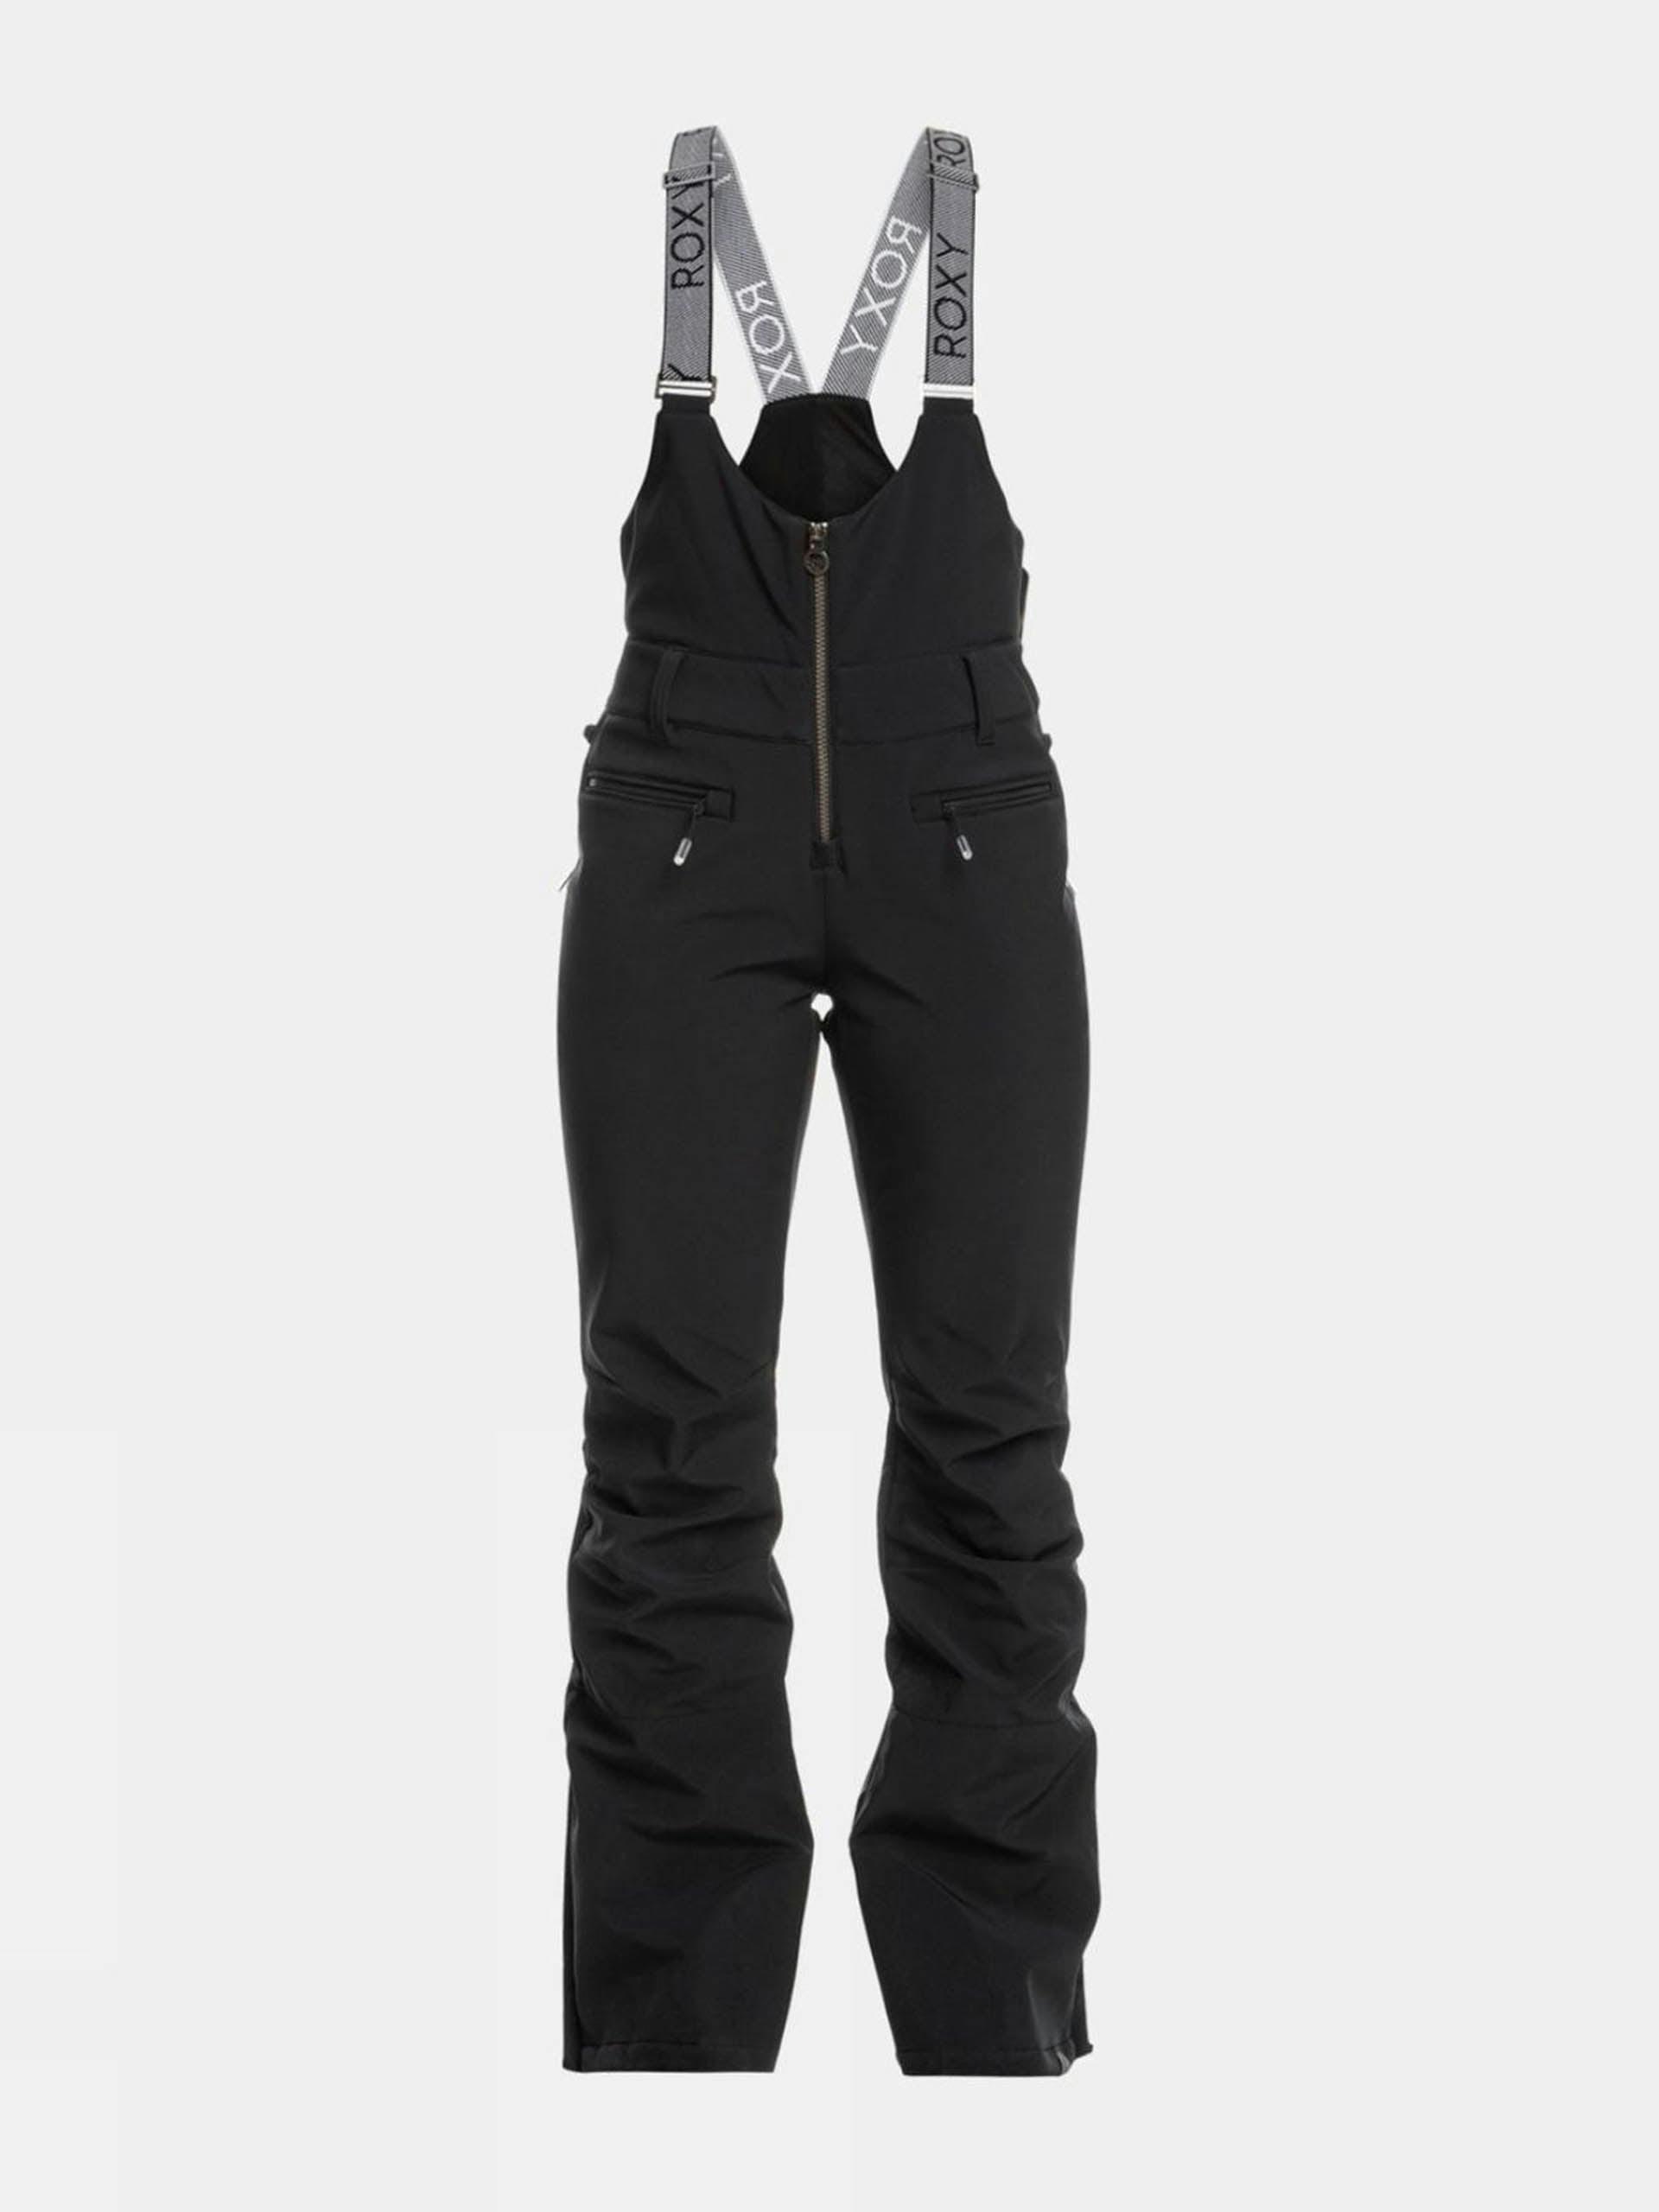 Black ski trousers